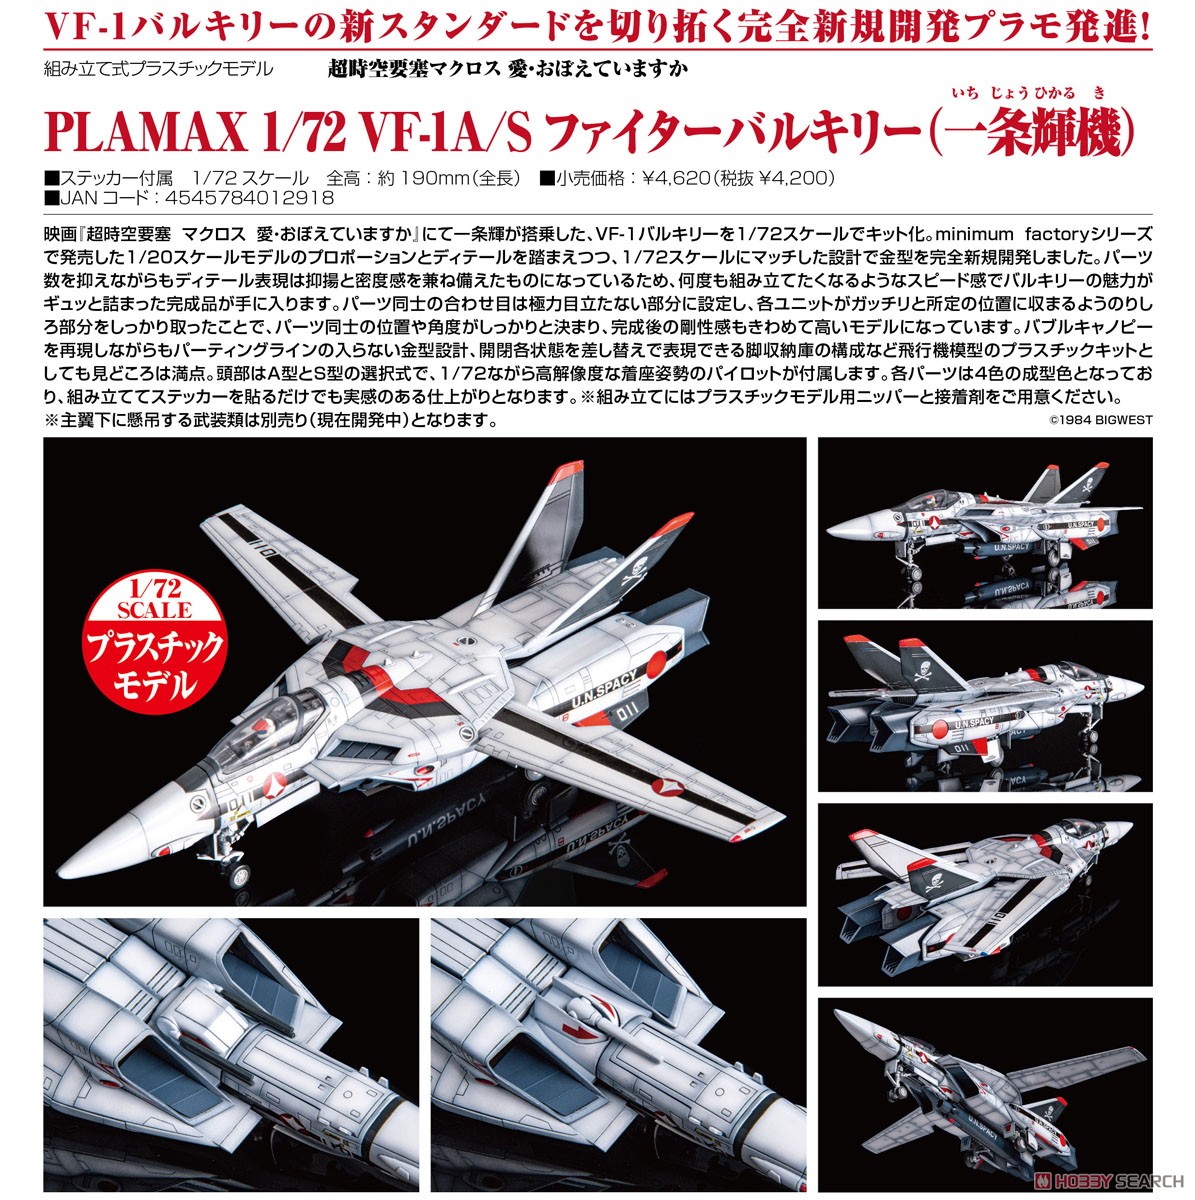 PLAMAX 1/72 VF-1A/S ファイターバルキリー(一条輝機) (プラモデル) 商品画像10